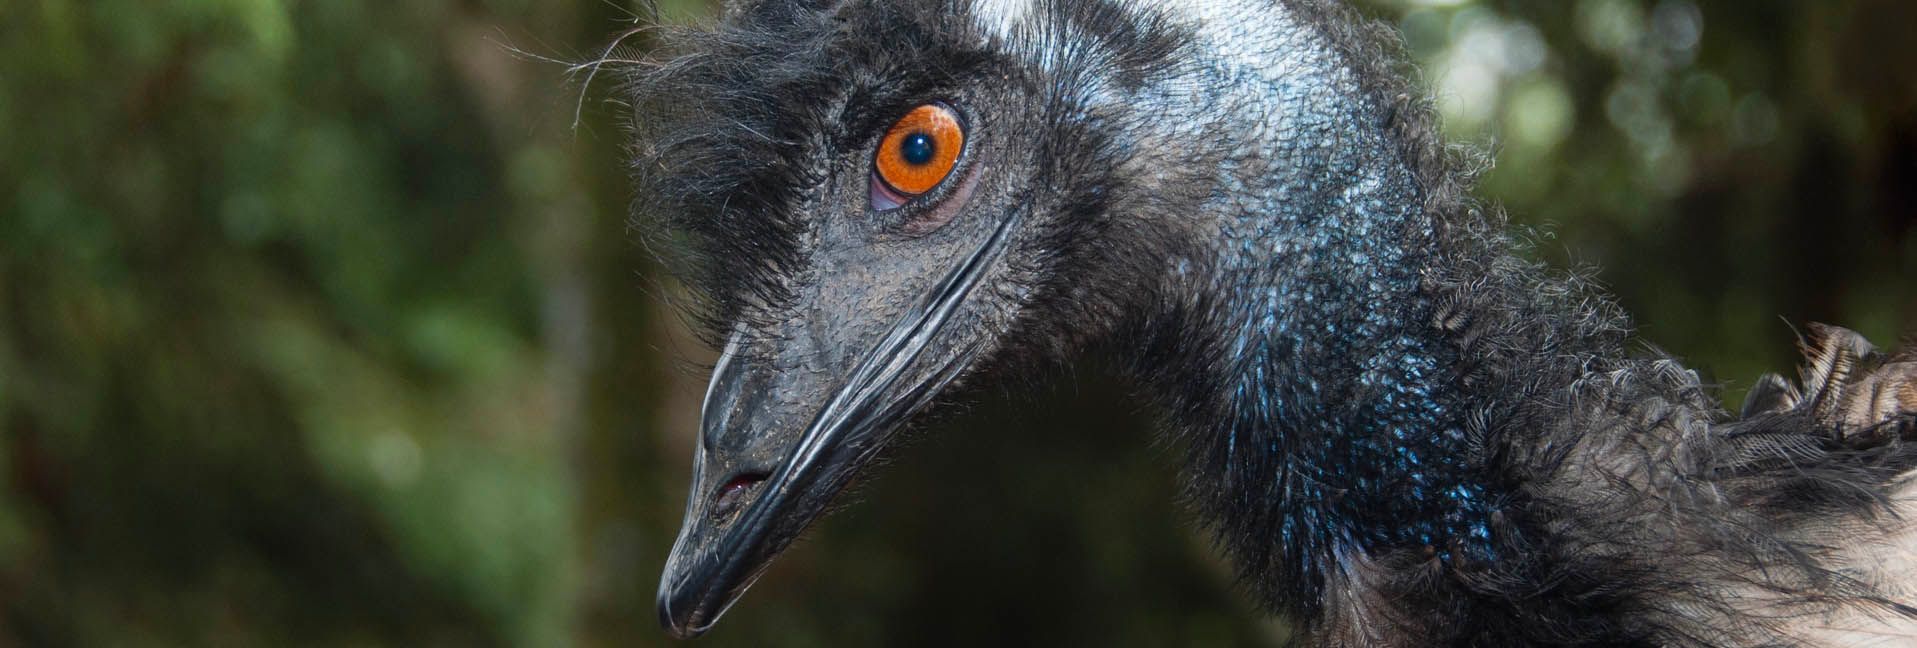 Six Reasons To Keep Emus - ‘Tastes like chicken’ isn’t one of them